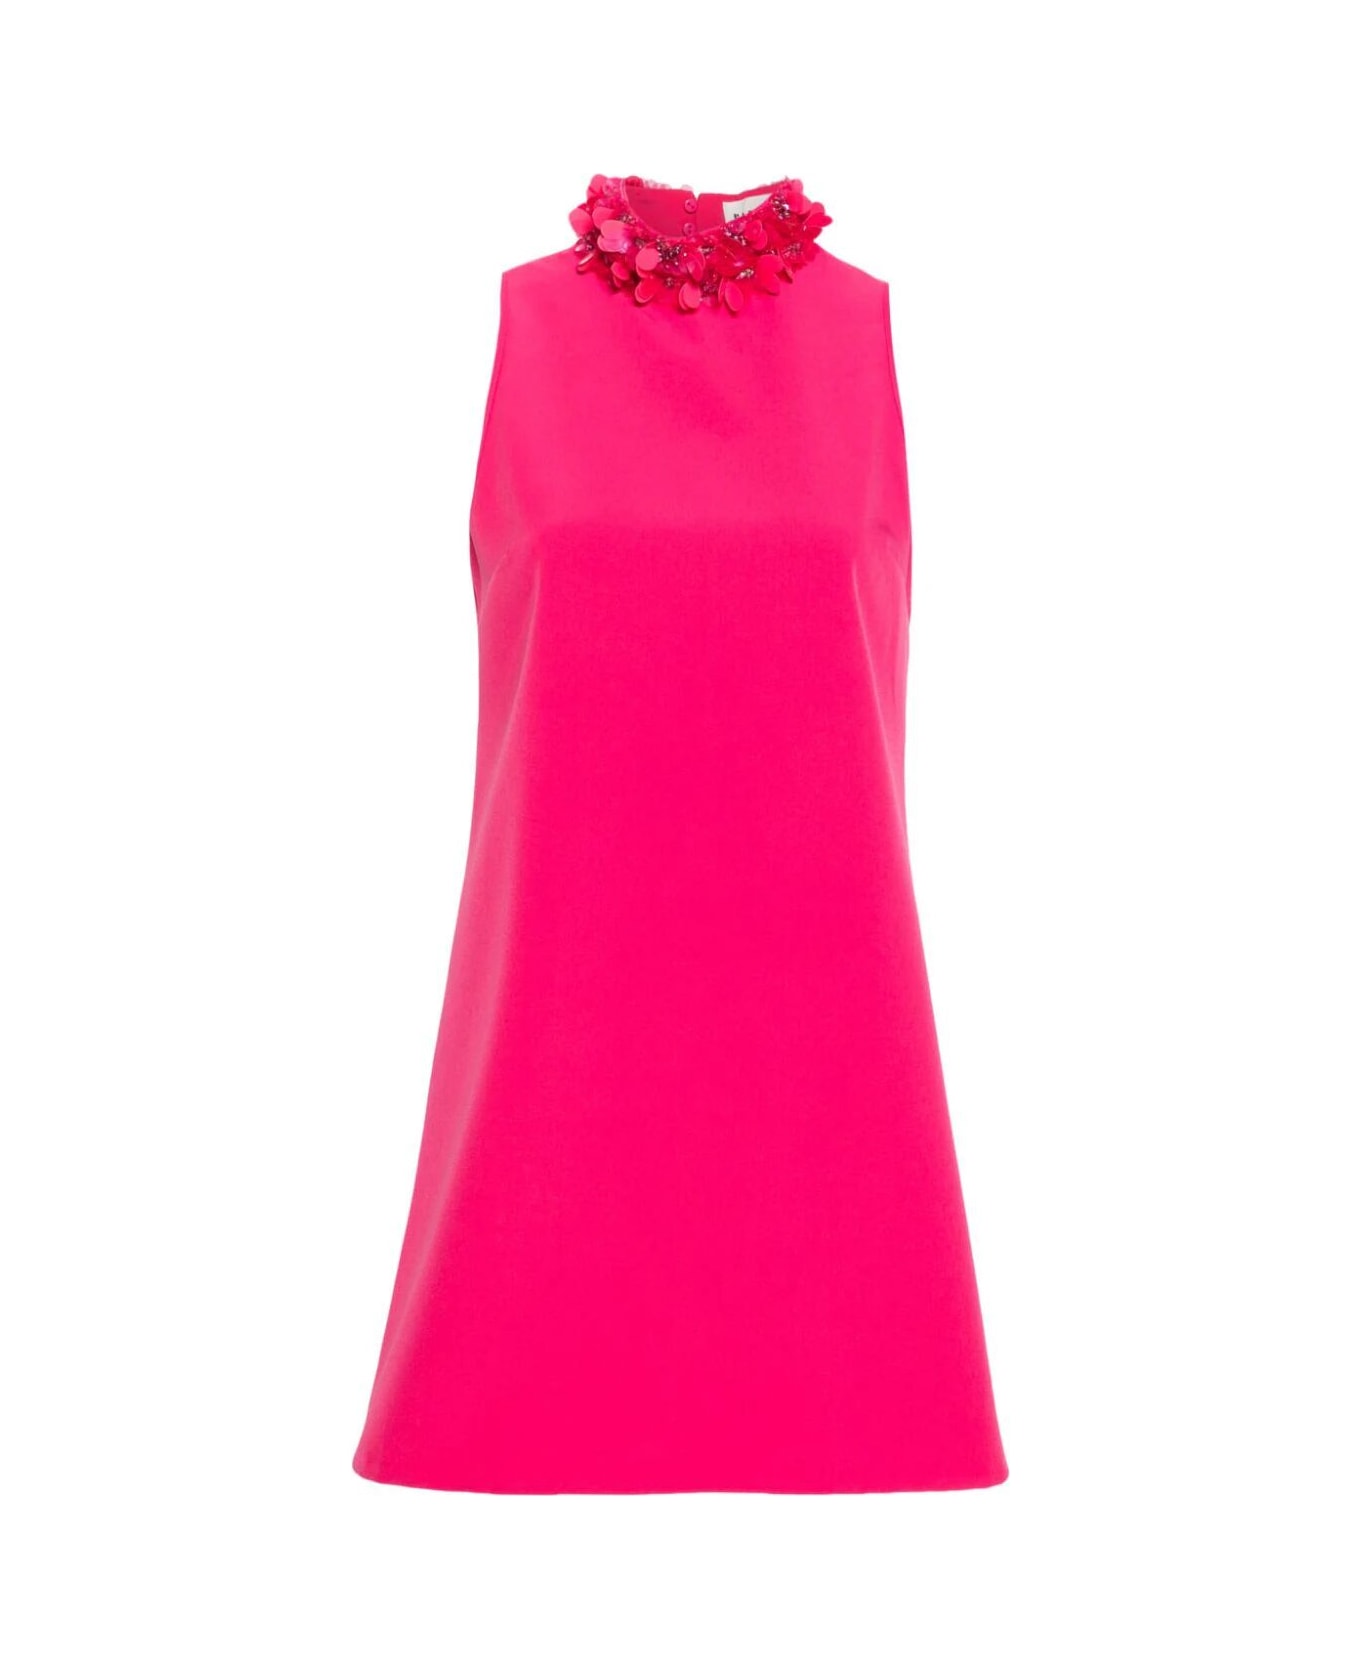 Parosh Sleeveless High Neck Mini Dress With Paillettes - Bubble Pink